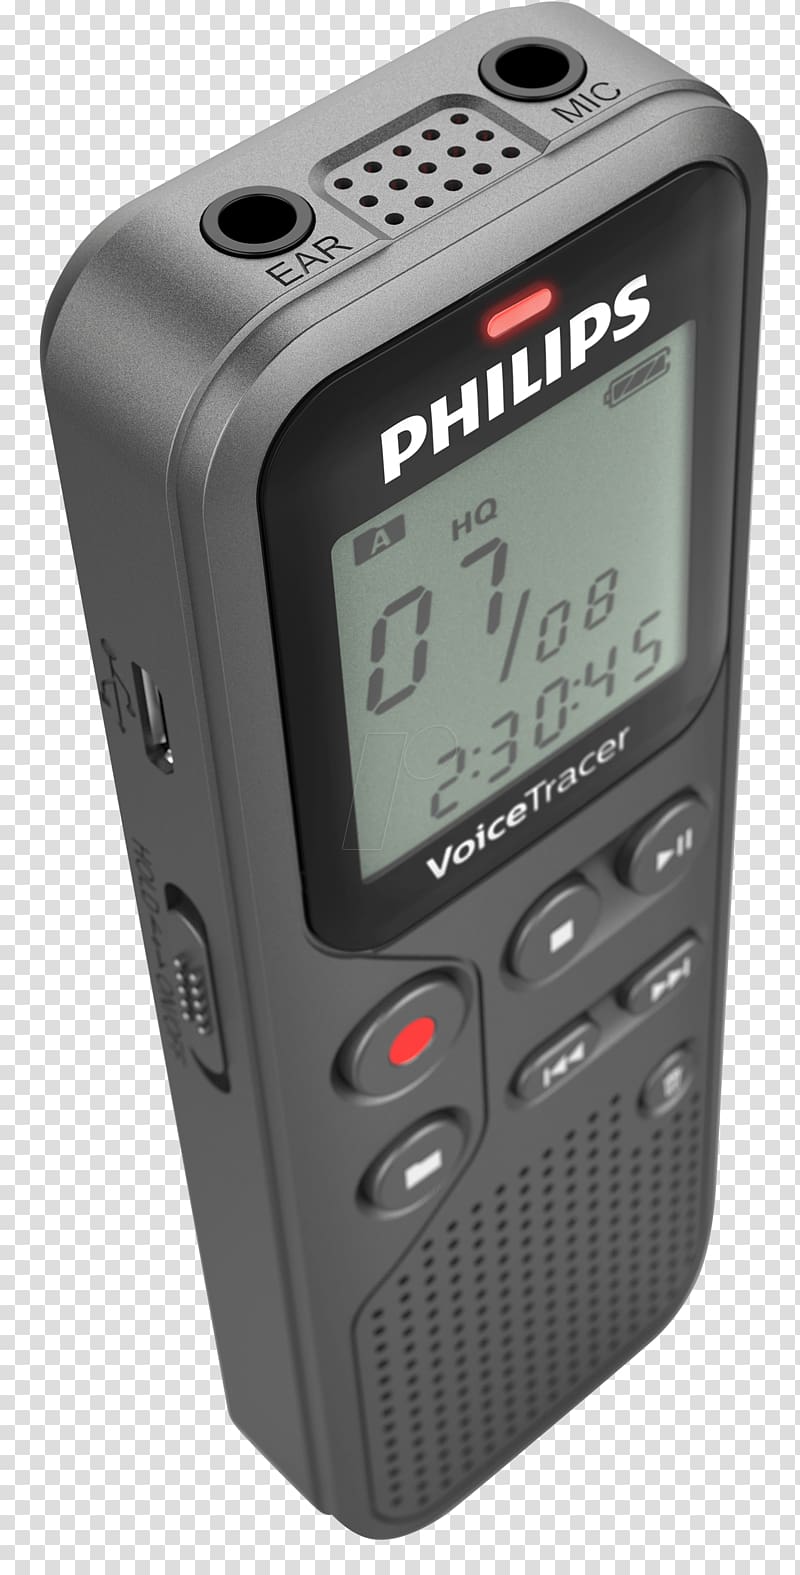 Philips Voice Tracer DVT2510 Dictation machine Electronics Accessory, transparent background PNG clipart